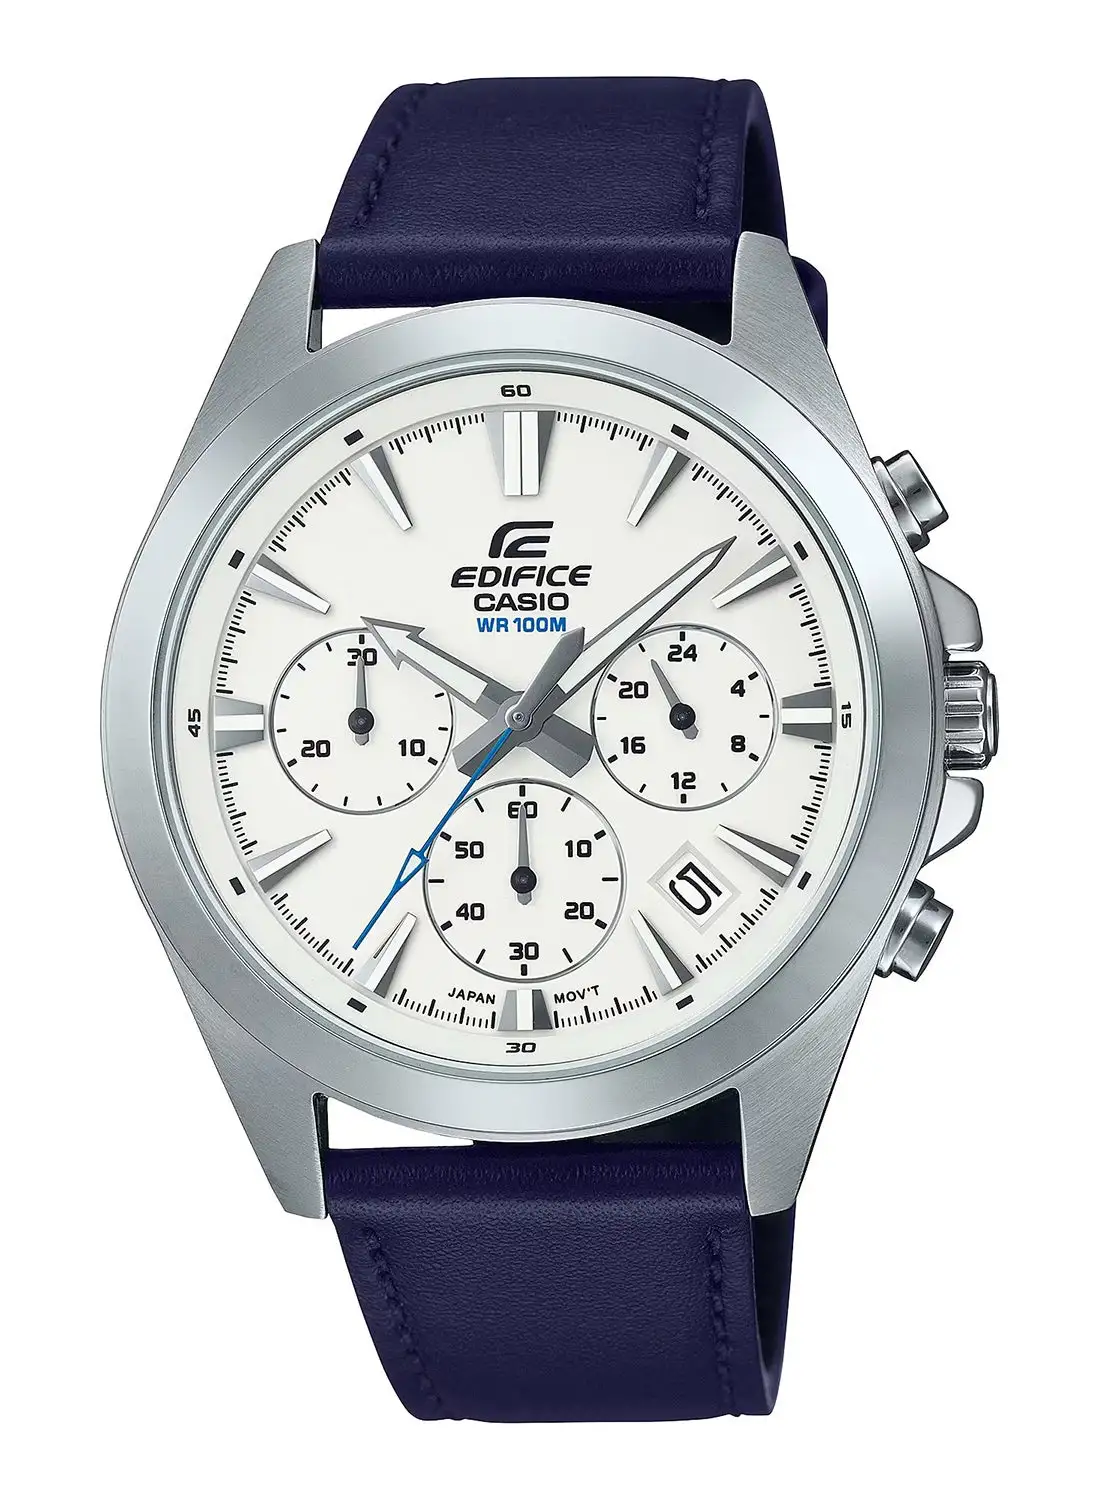 CASIO Men's Analog Leather Wrist Watch EFV-630L-7AVUDF - 42 Mm